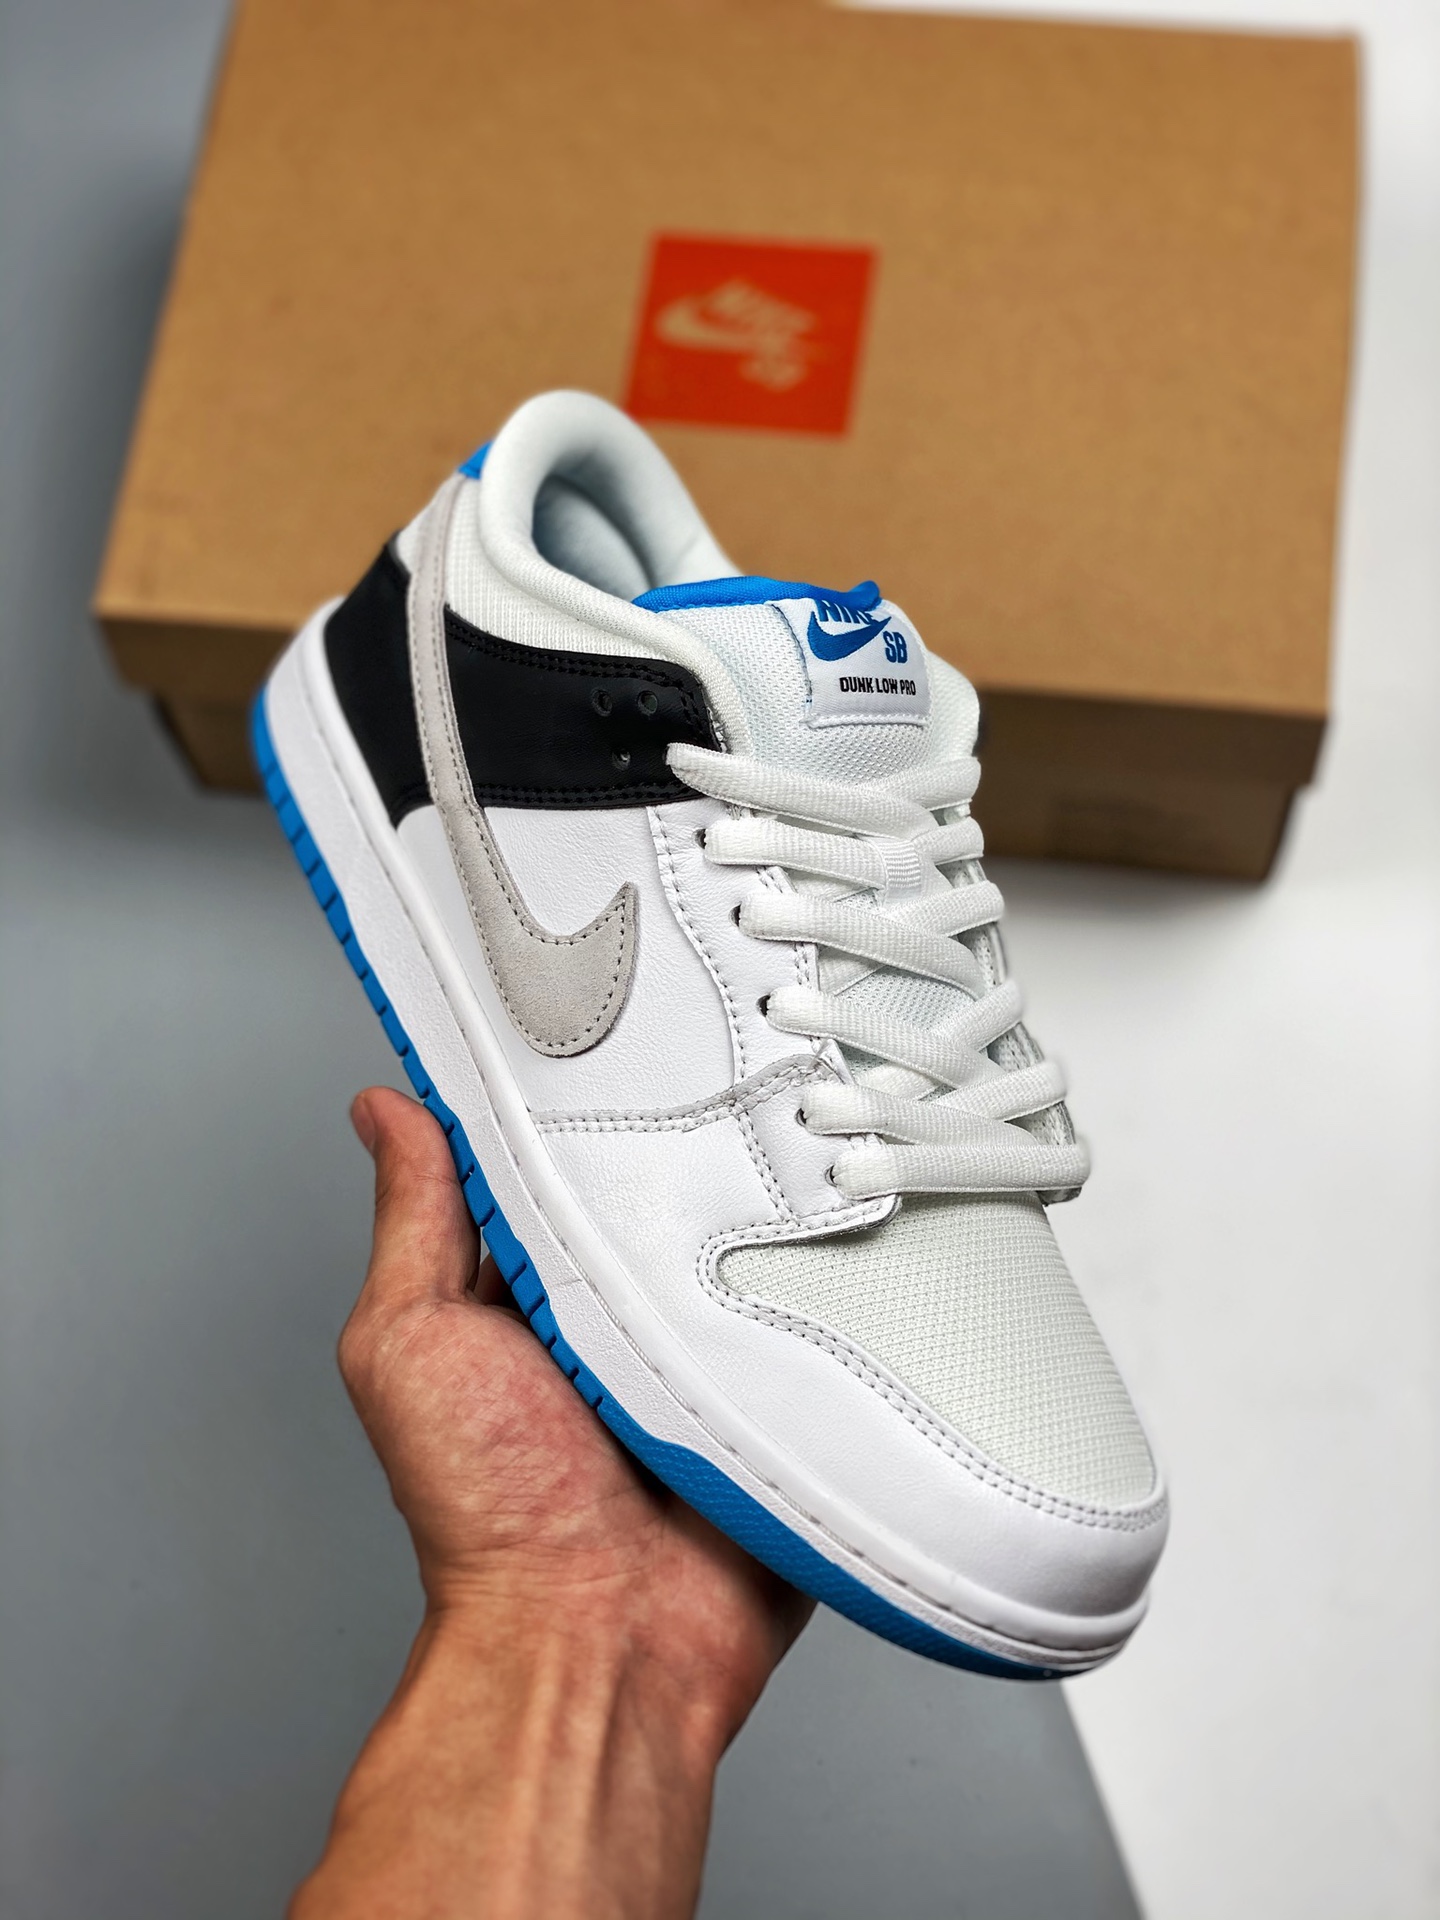 Nike SB Dunk Low "Laser Blue" BQ6817-101 Shoes